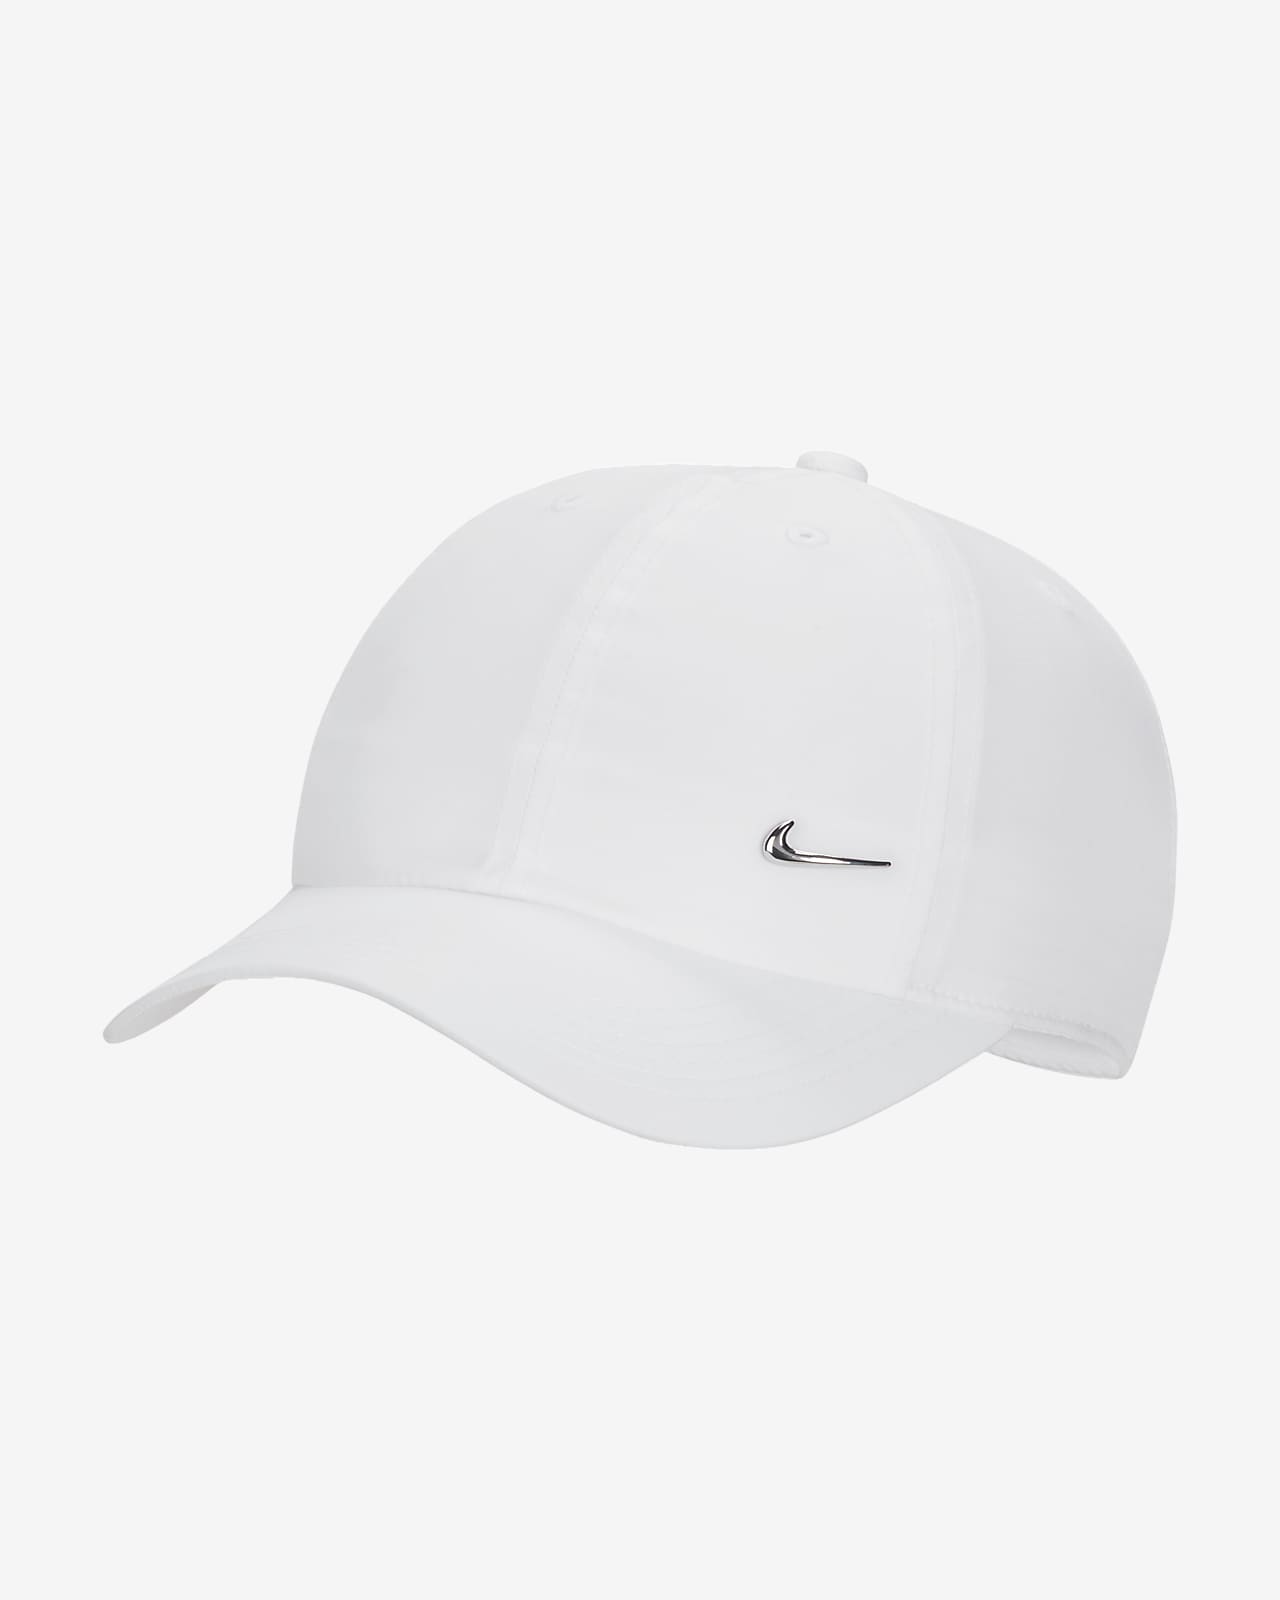 Nike Dri-FIT Club Gorra sin estructura con logotipo Swoosh metálico - Niño/a